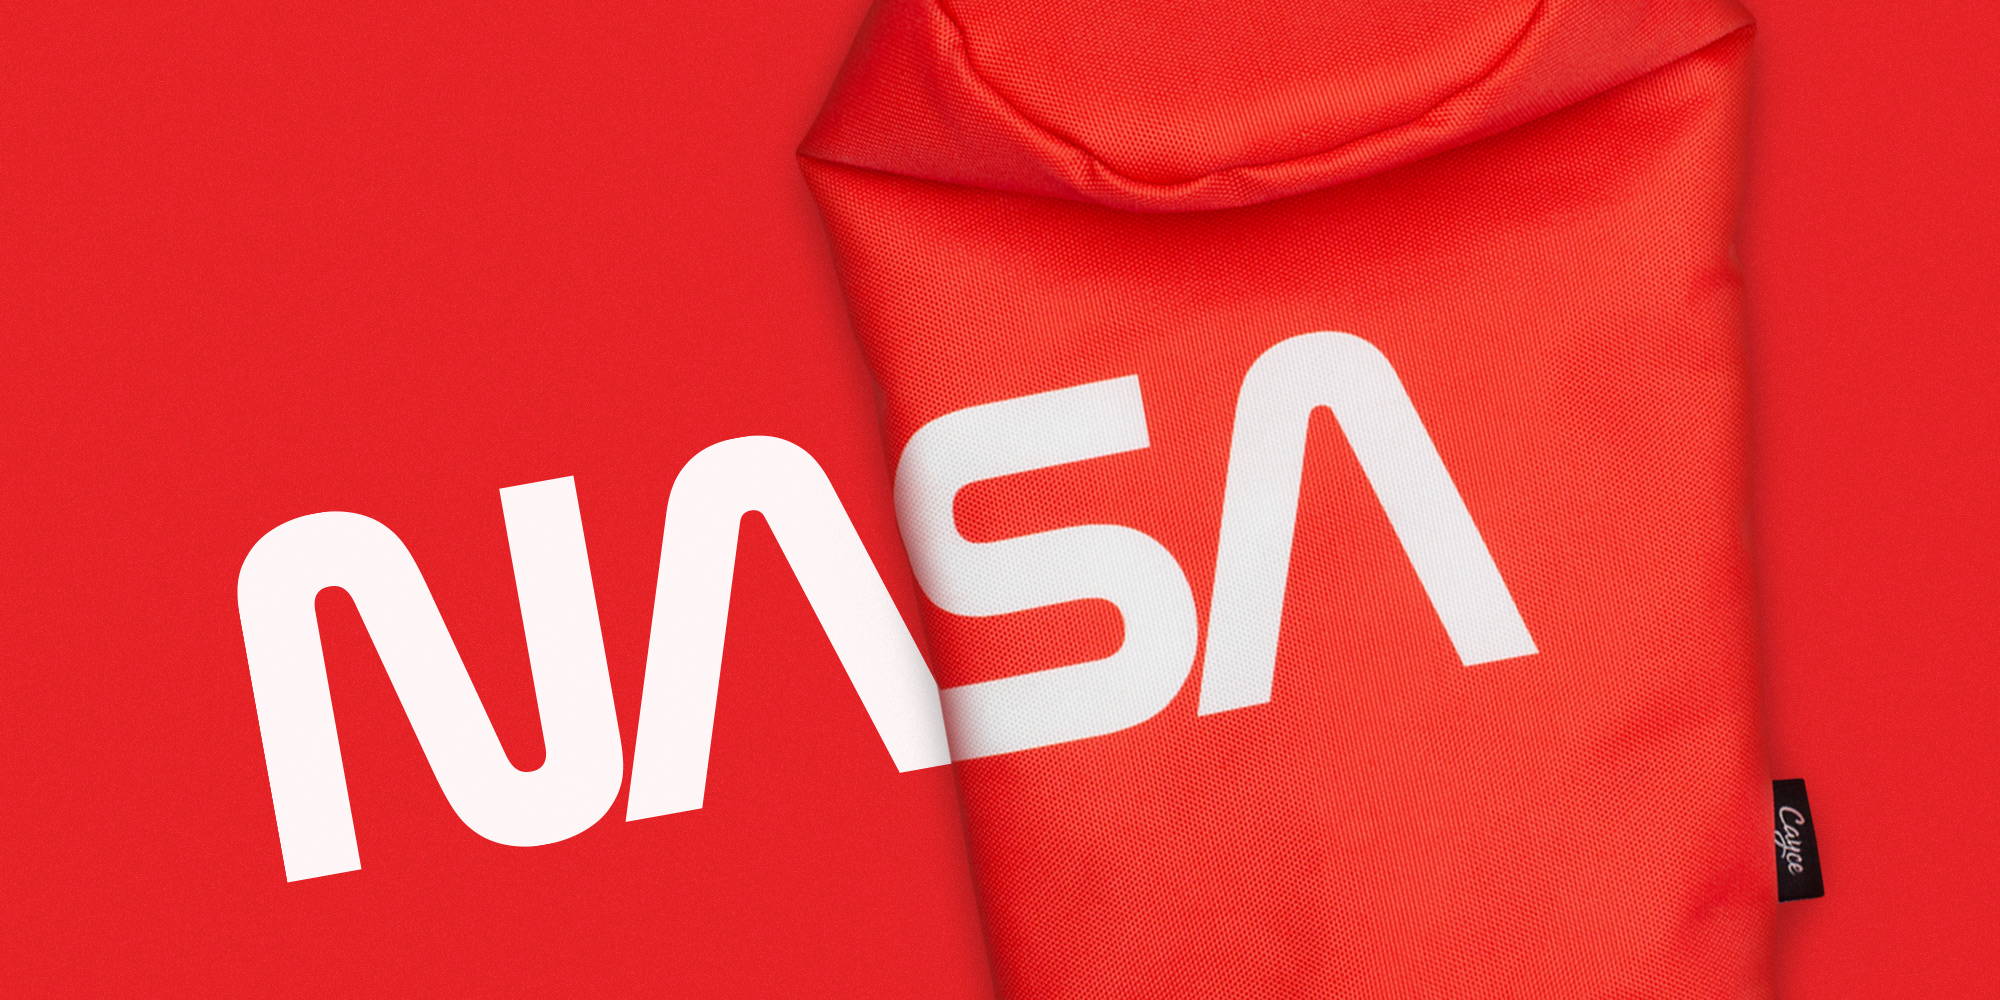 Custom Golf Headcovers with NASA logotype branding